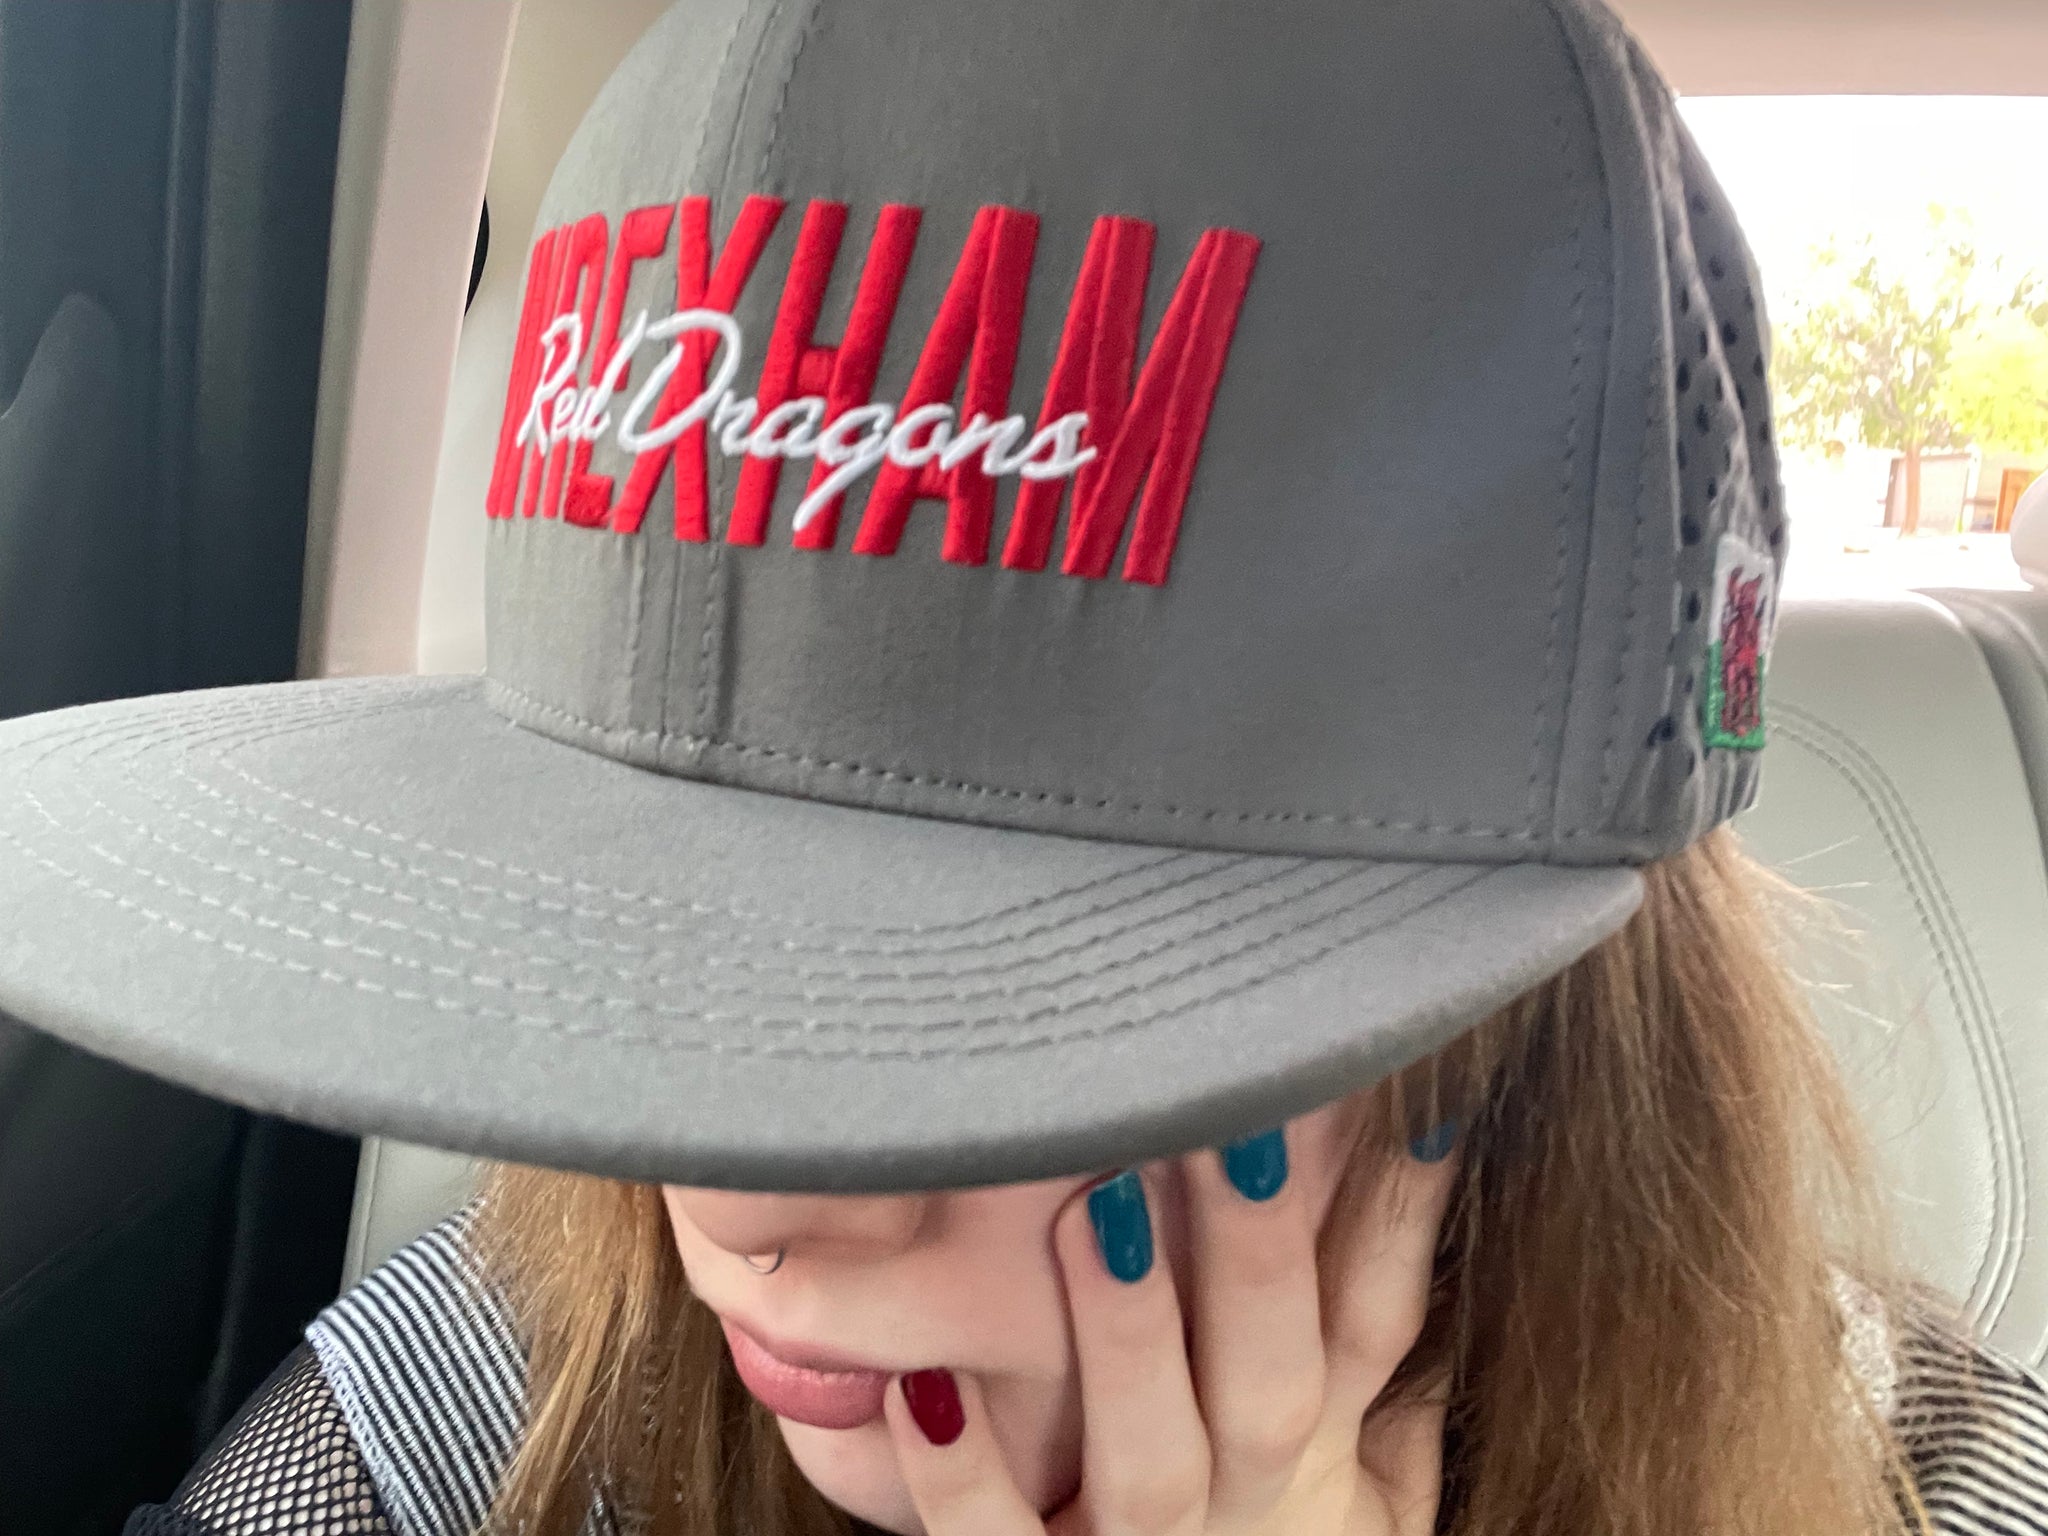 Wrexham Red Dragons Snapback Cap/Hat